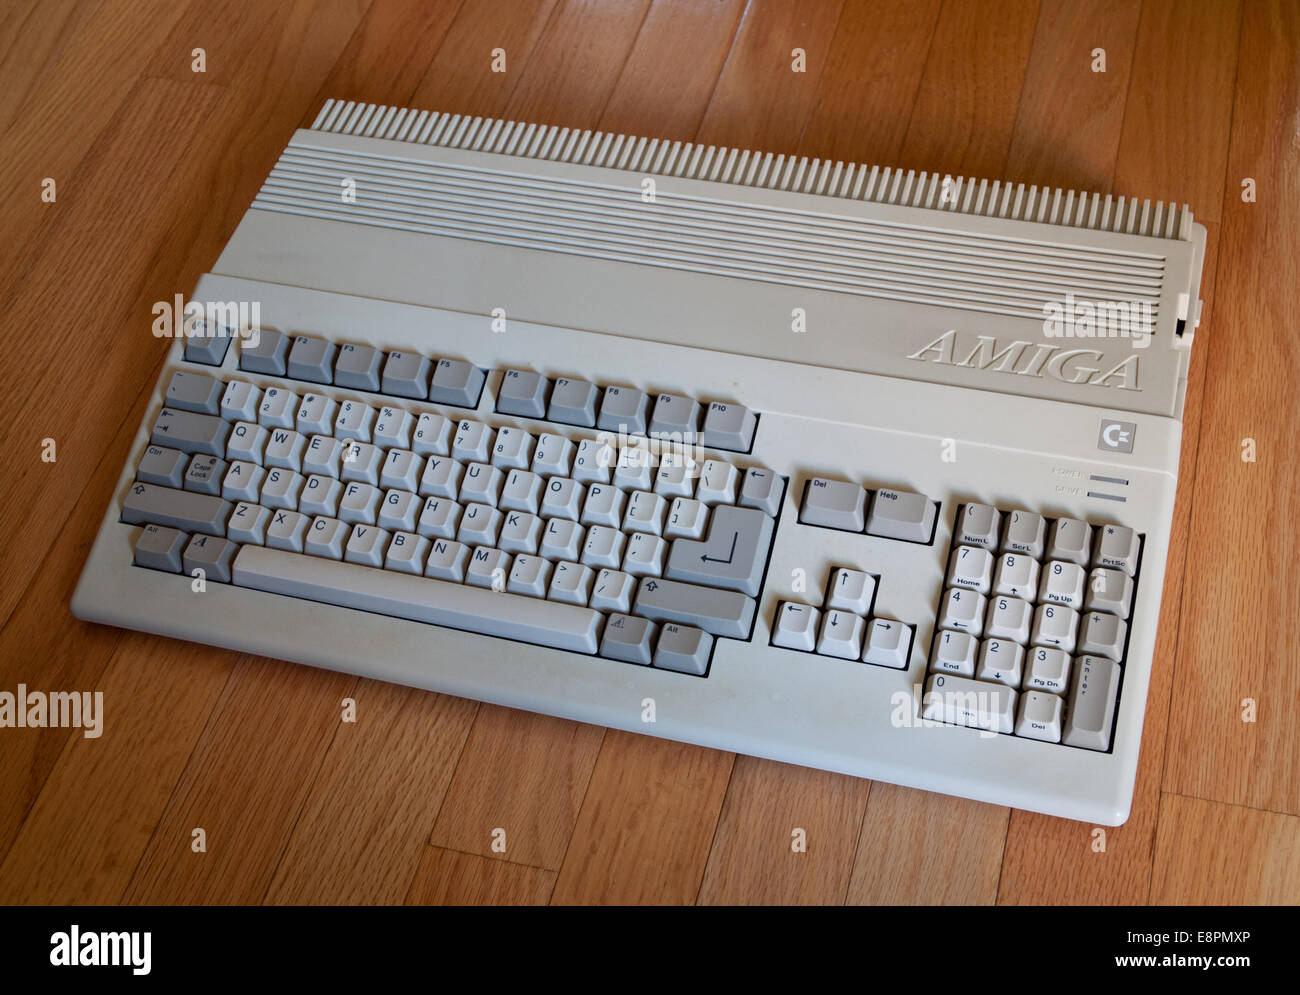 A vintage Commodore Amiga 500 computer Stock Photo - Alamy